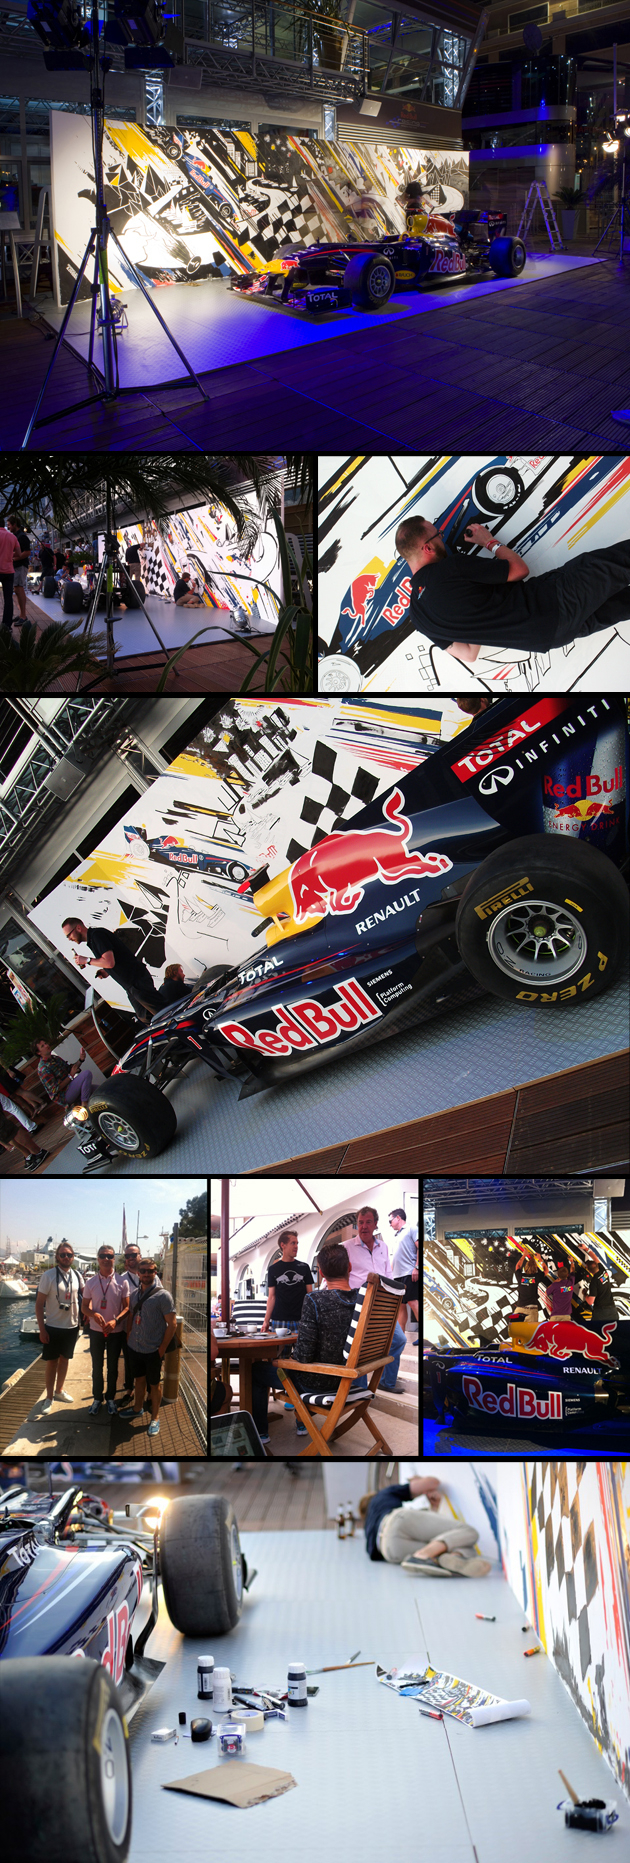 Ilovedust / Red Bull Racing / "The Art Of Racing" Live Mural / Monaco GP 2011